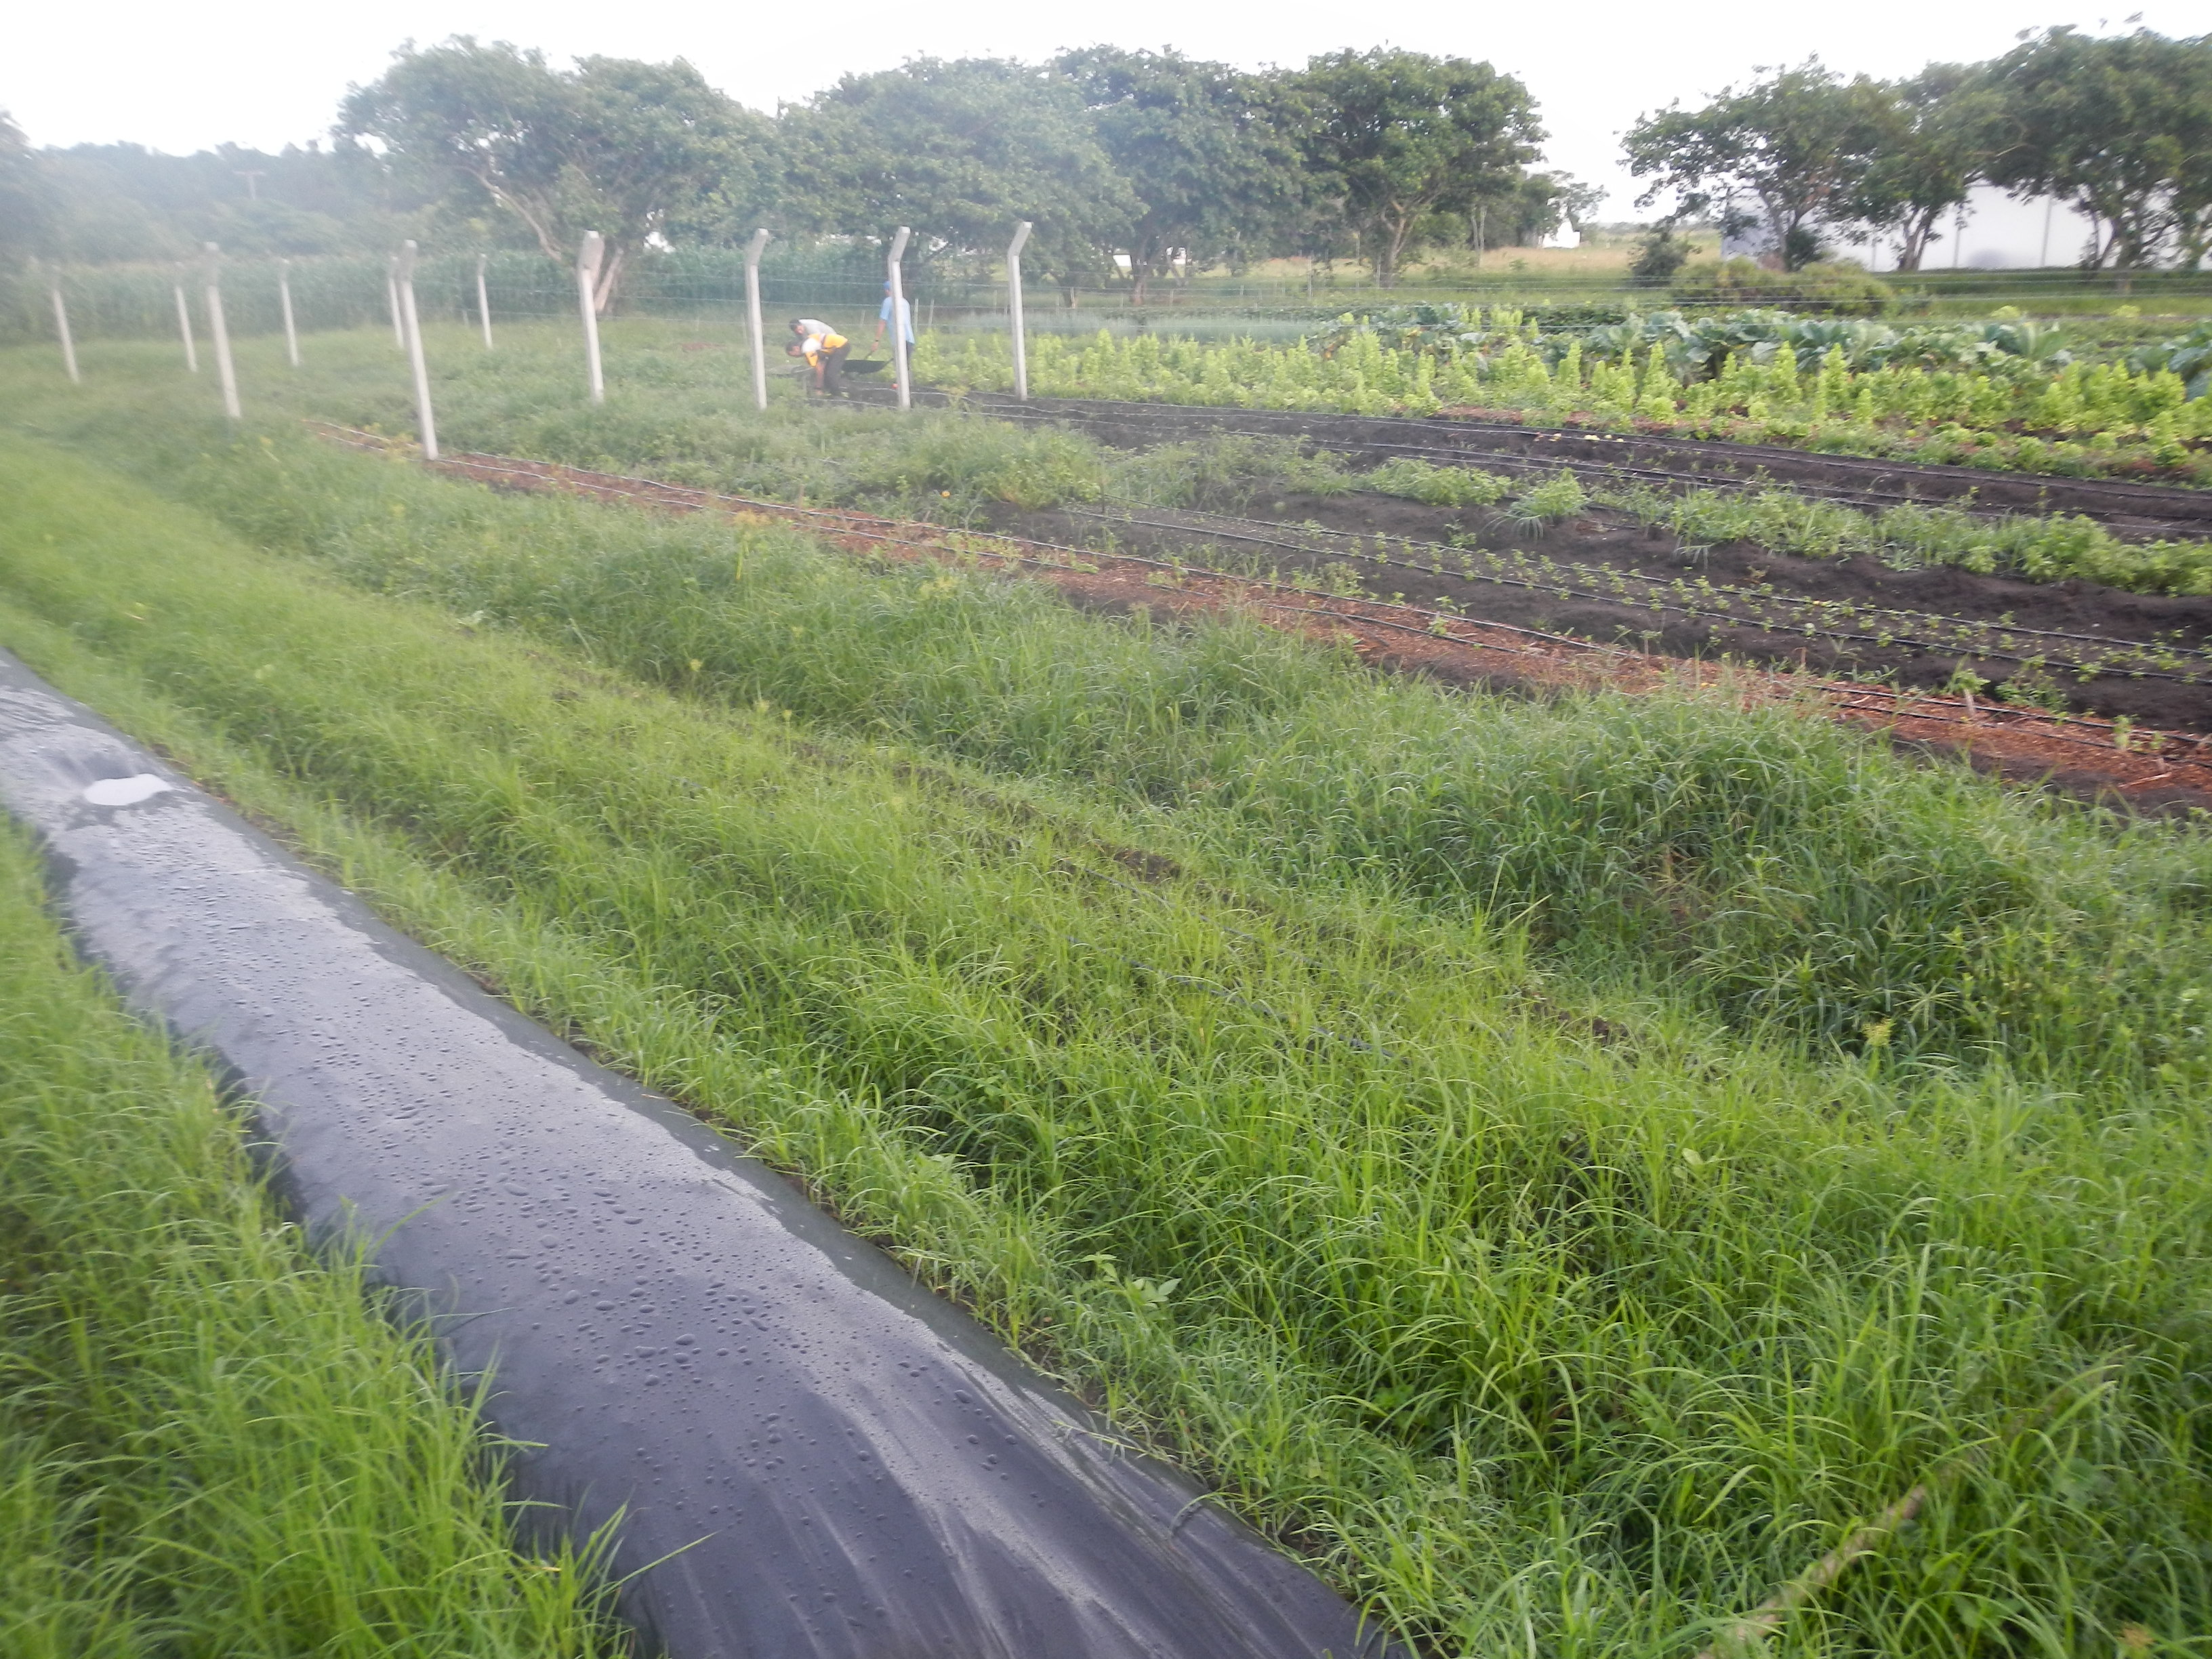 20130109 Fazenda Horta e área para plantio abacaxi.jpg